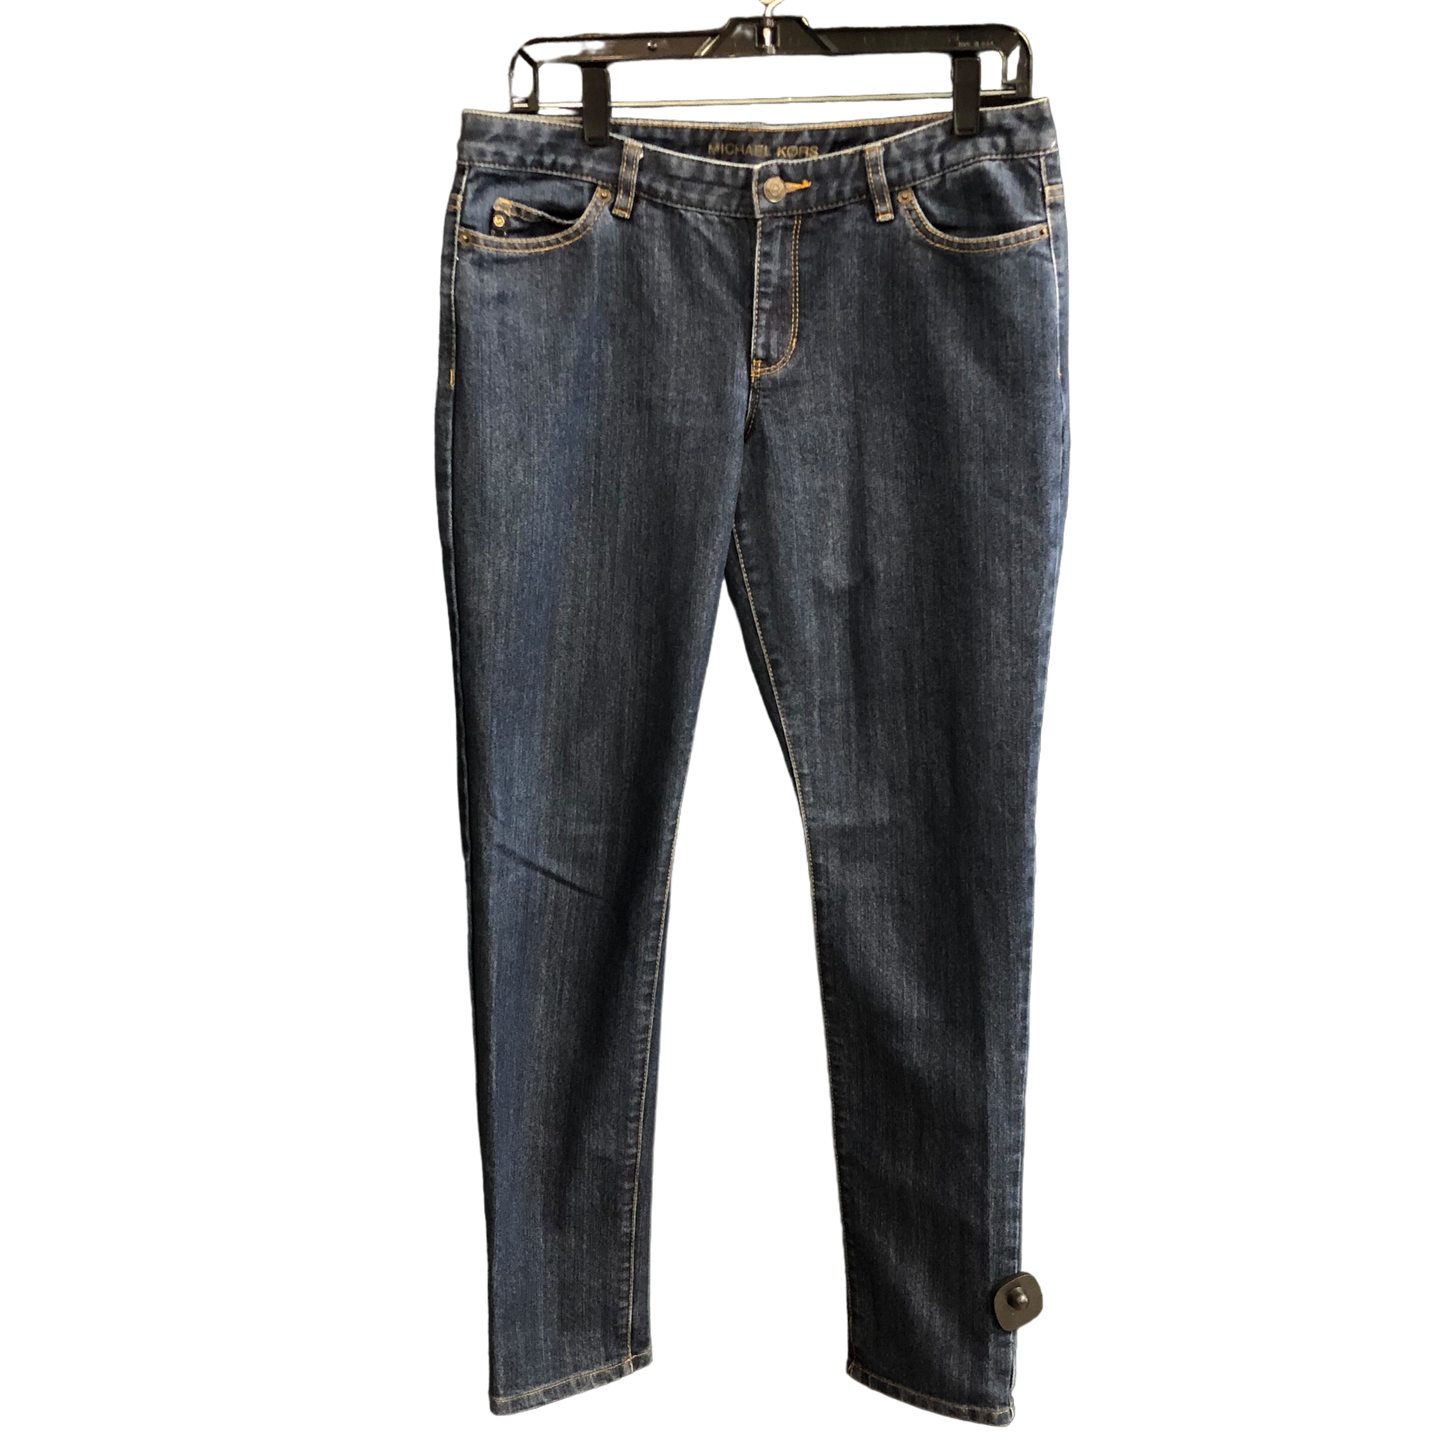 Blue Denim Jeans Designer Michael Kors, Size 8